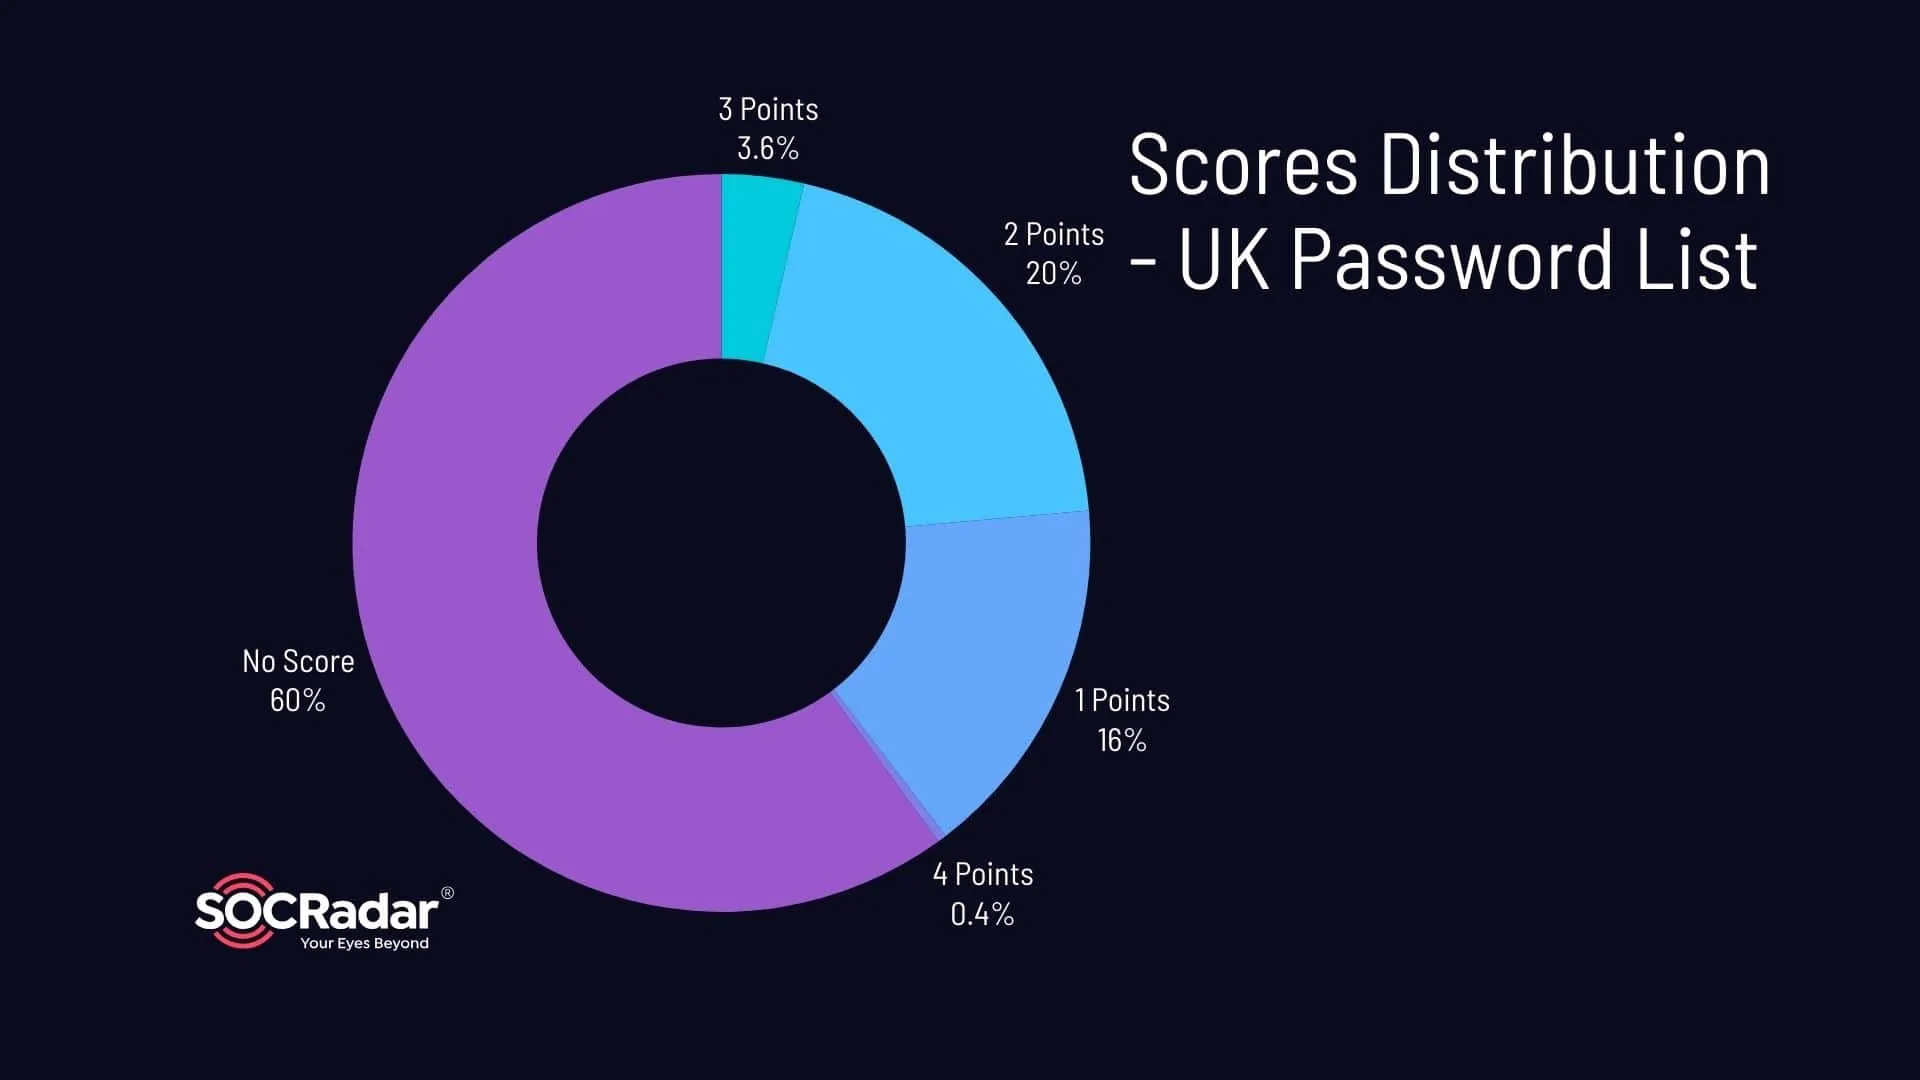 Distribution of the Scores – UK Password List